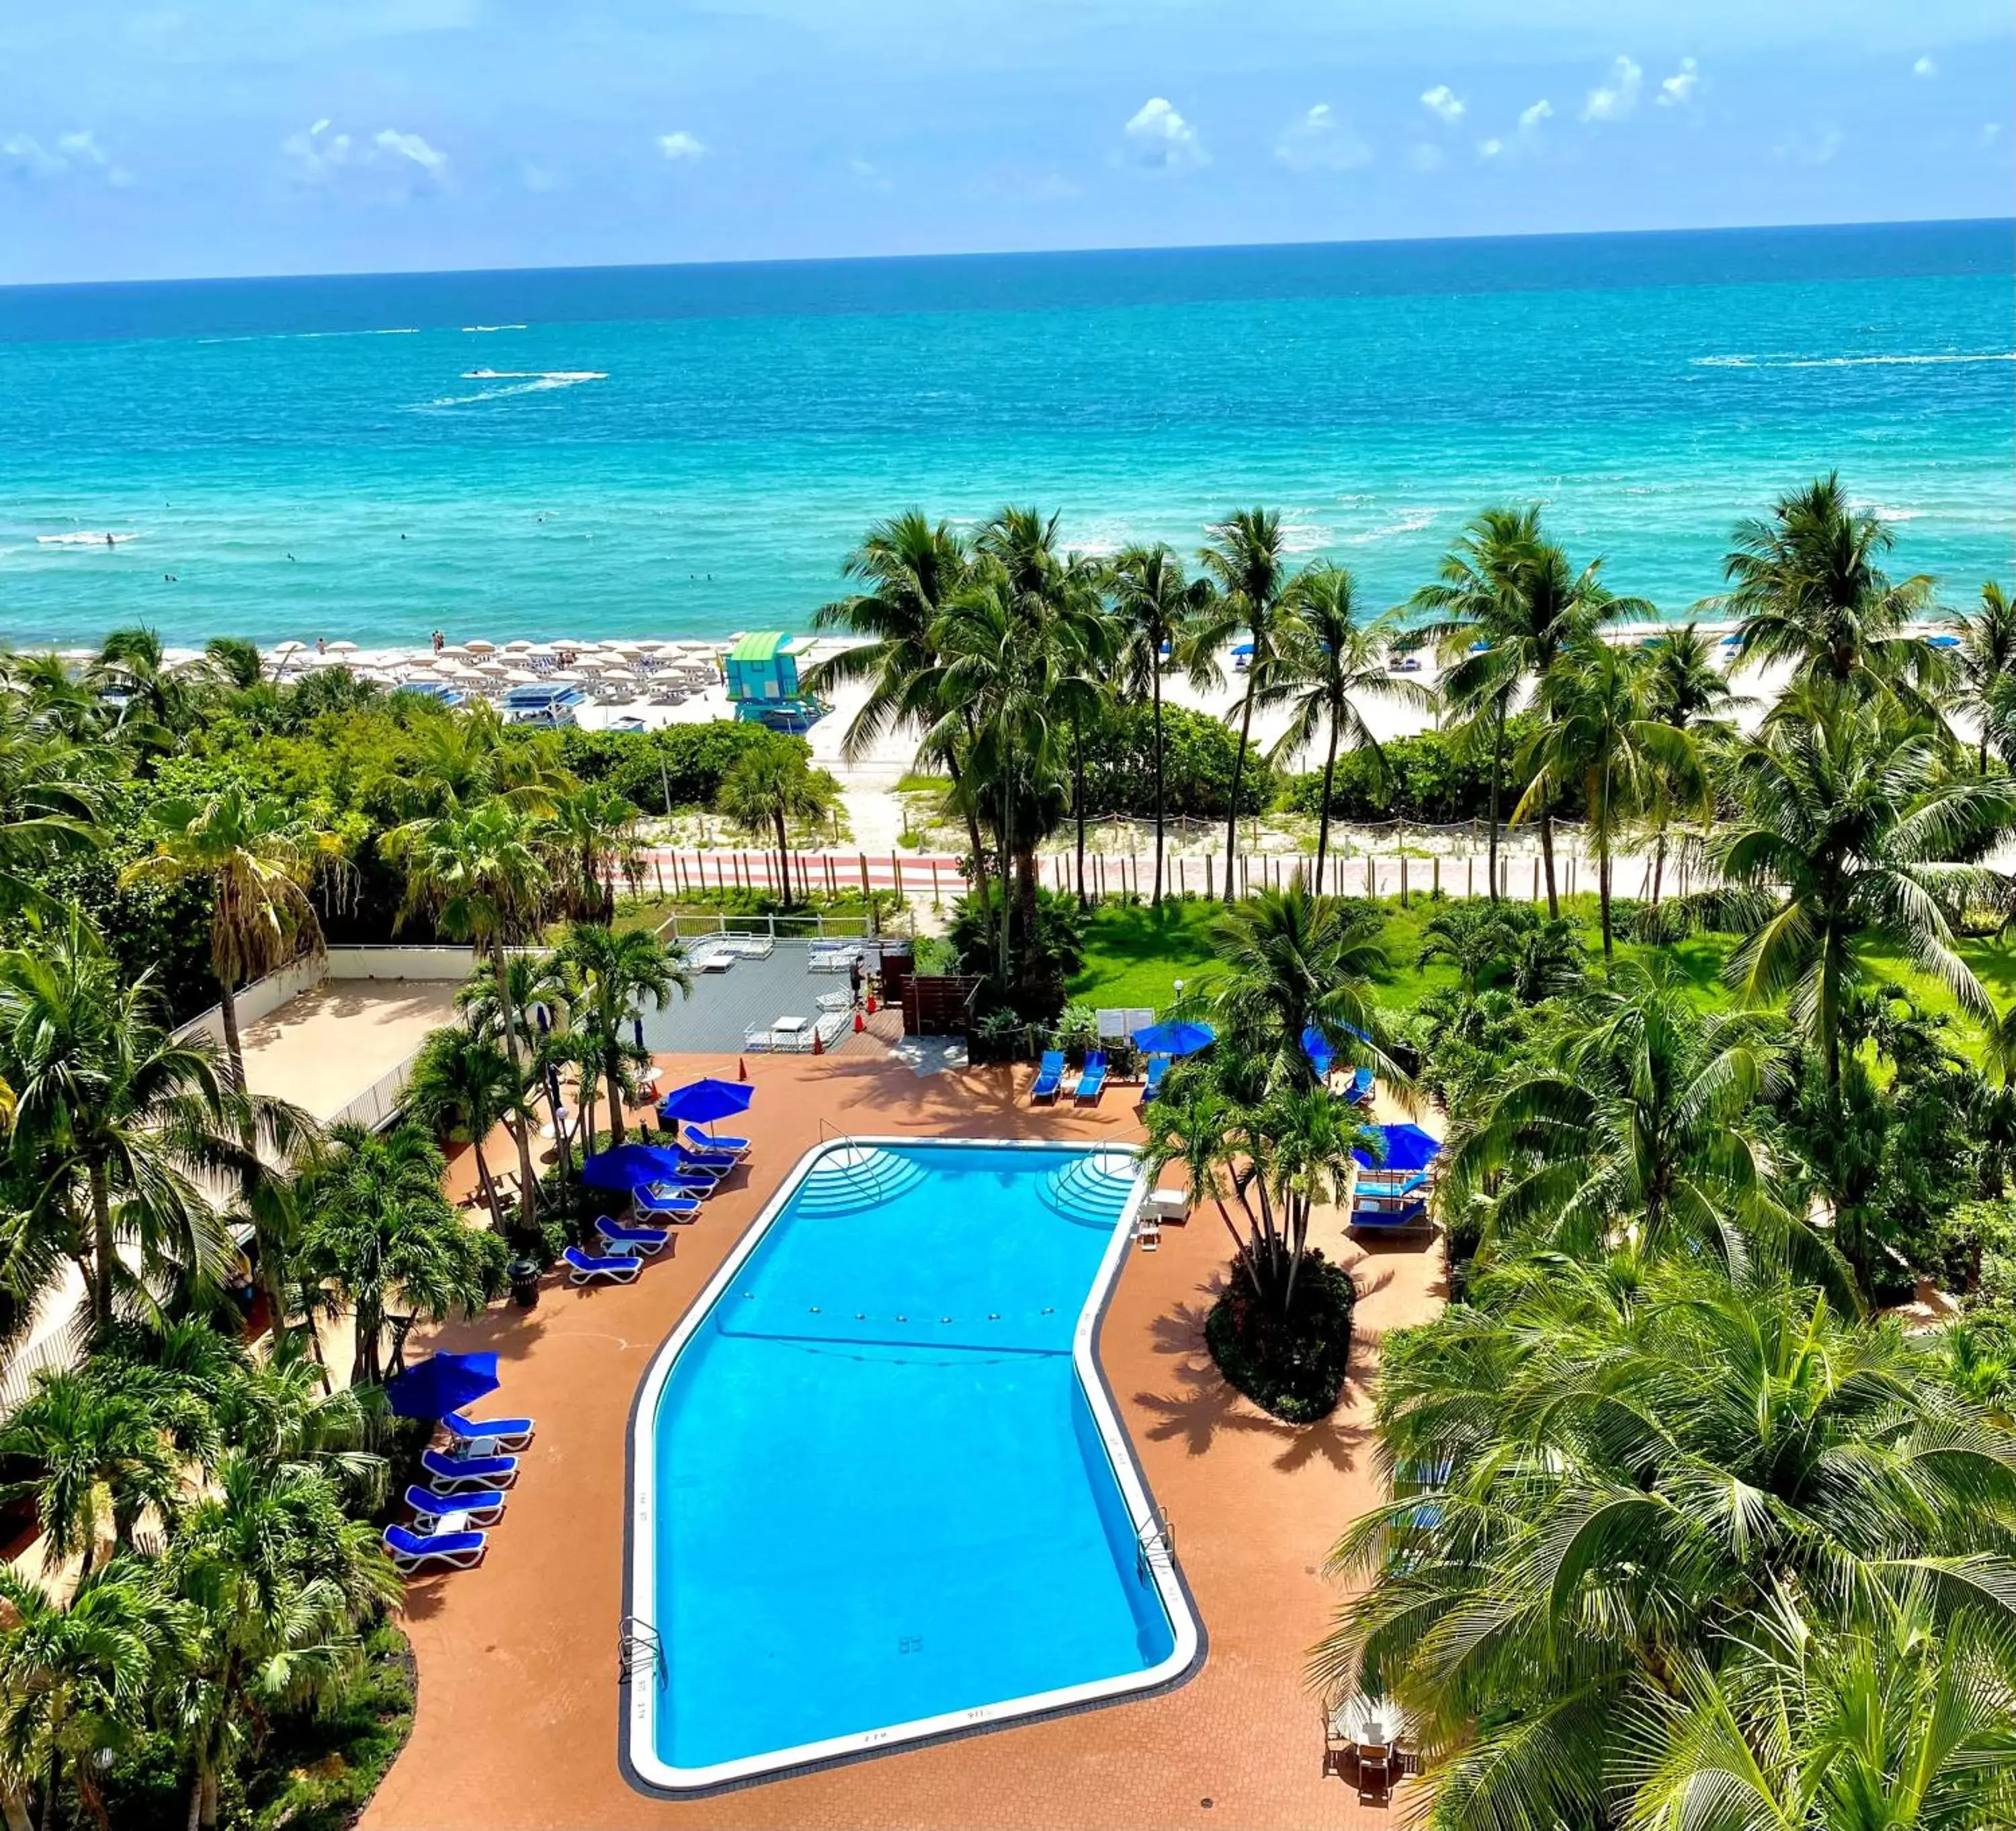 Bird's eye view, Pool View in Radisson Resort Miami Beach